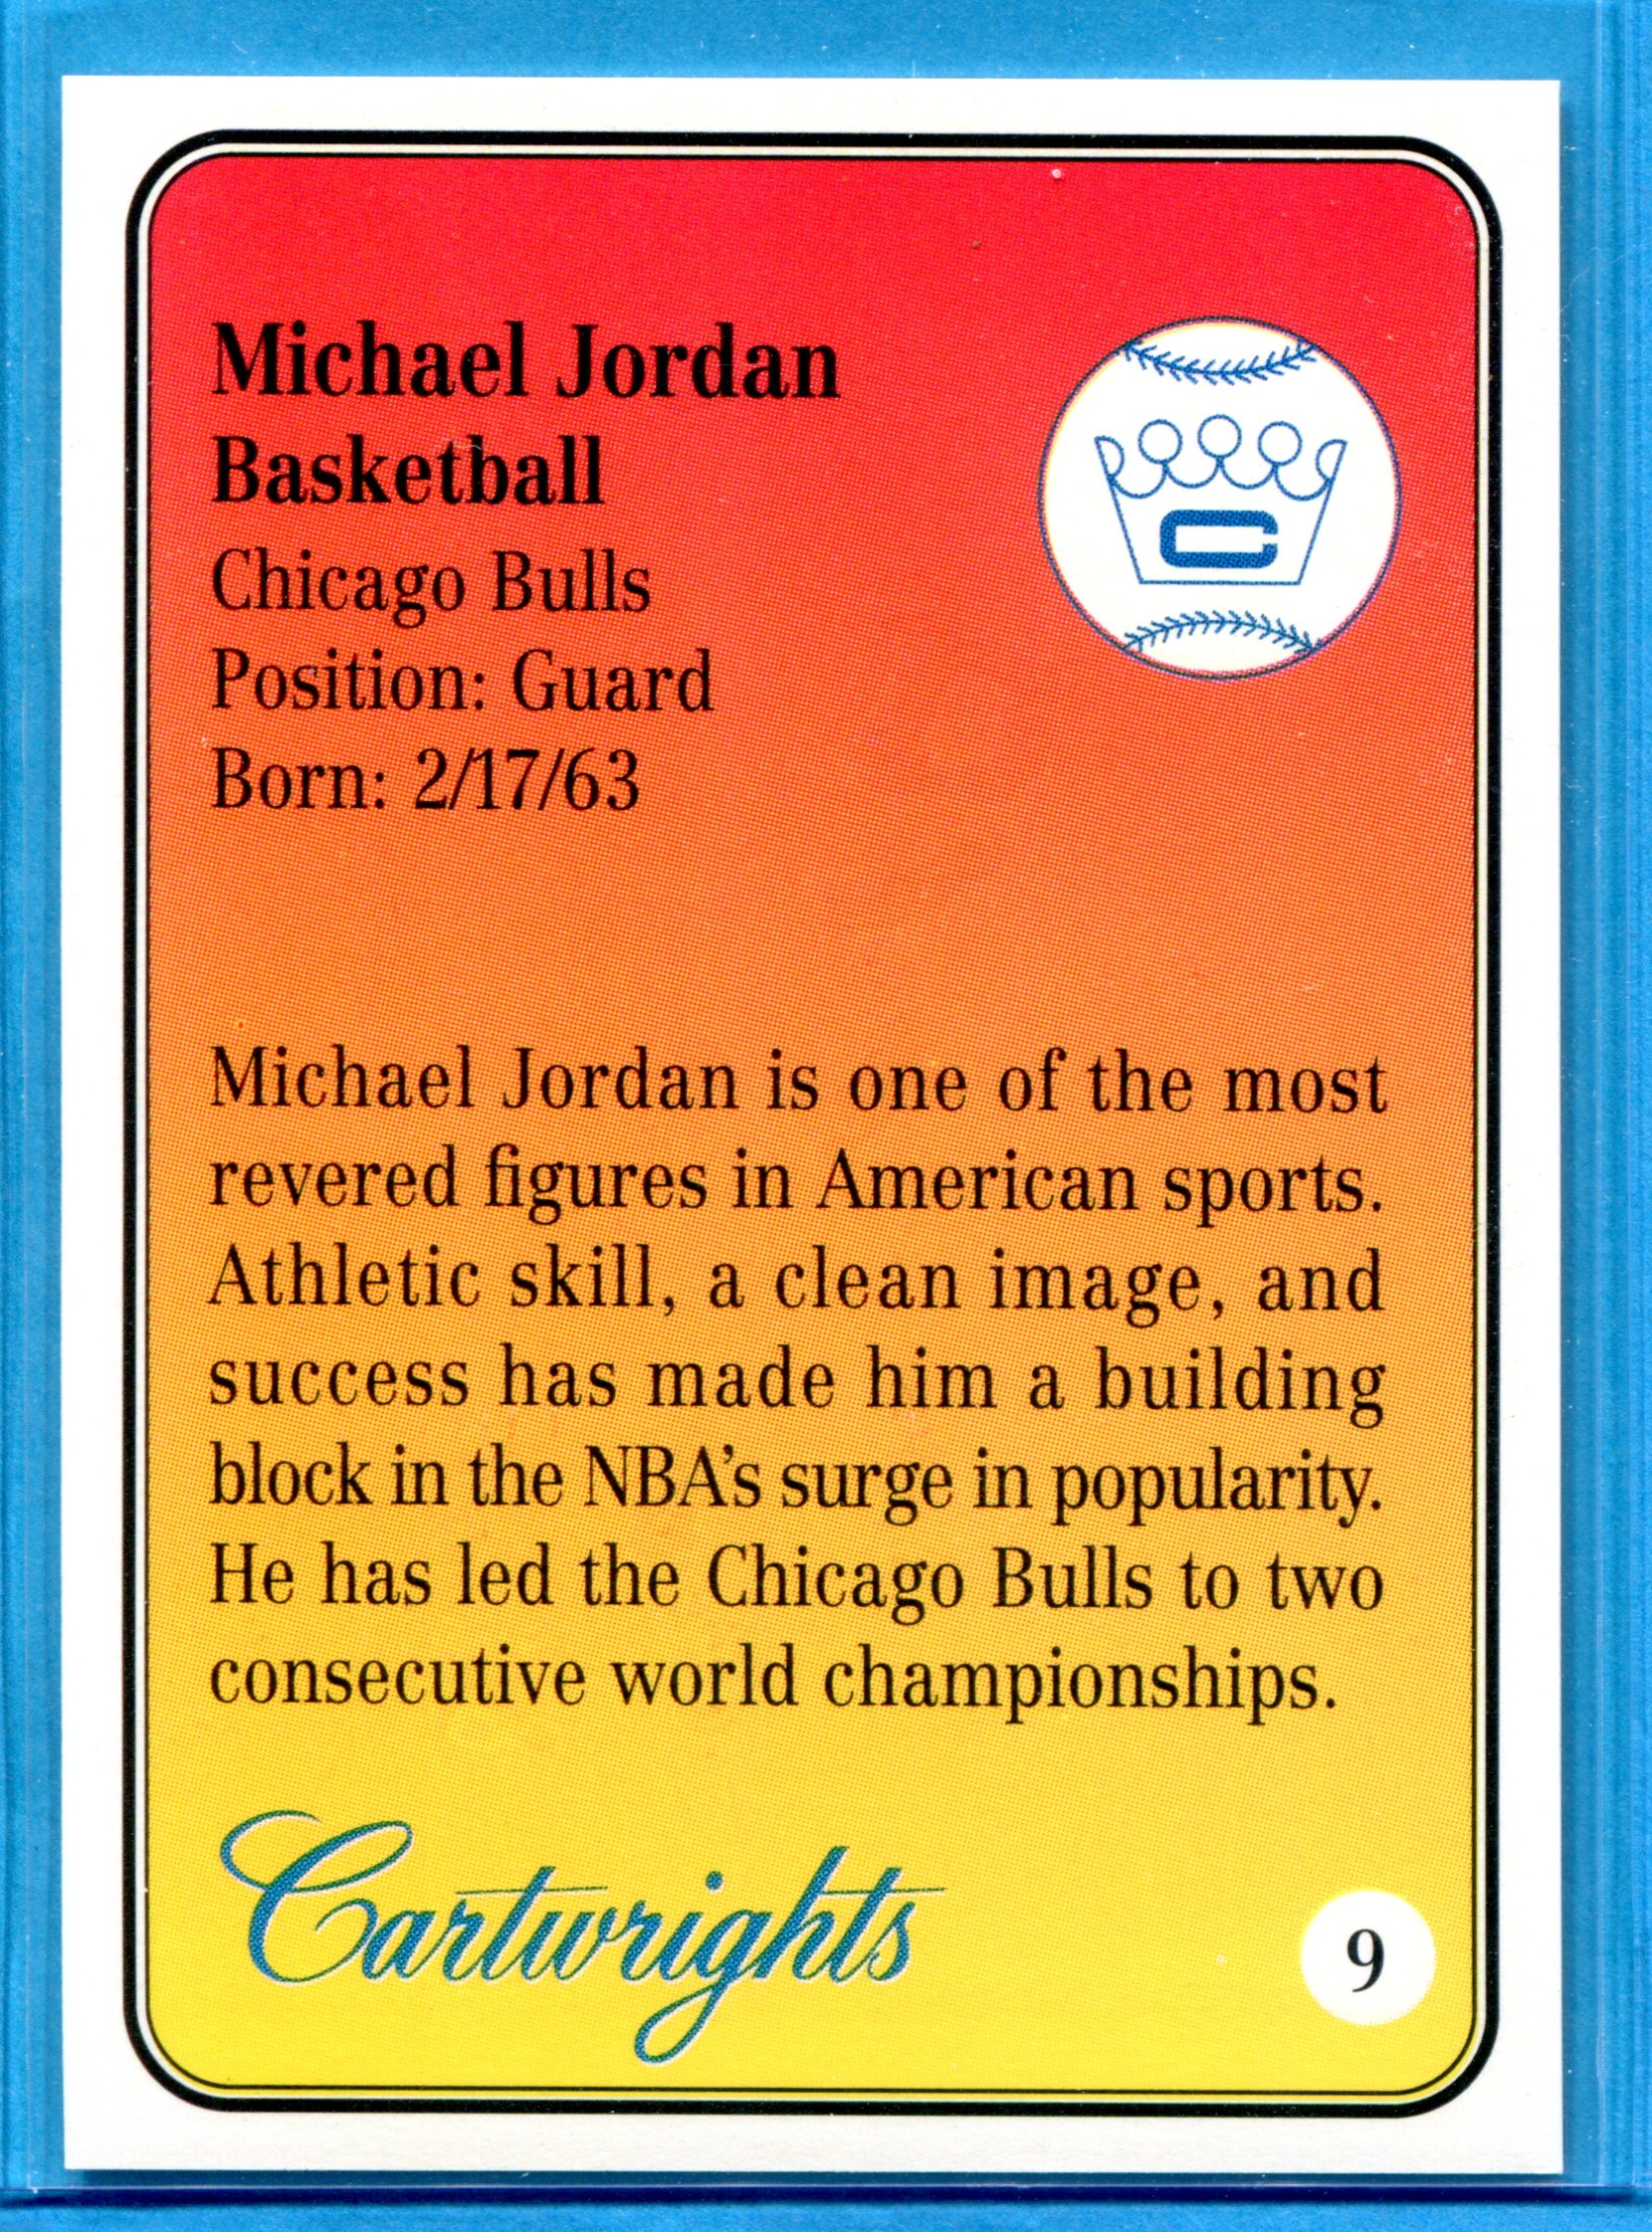 1992 Cartwright's Gold Foil Card #9 Michael Jordan back image